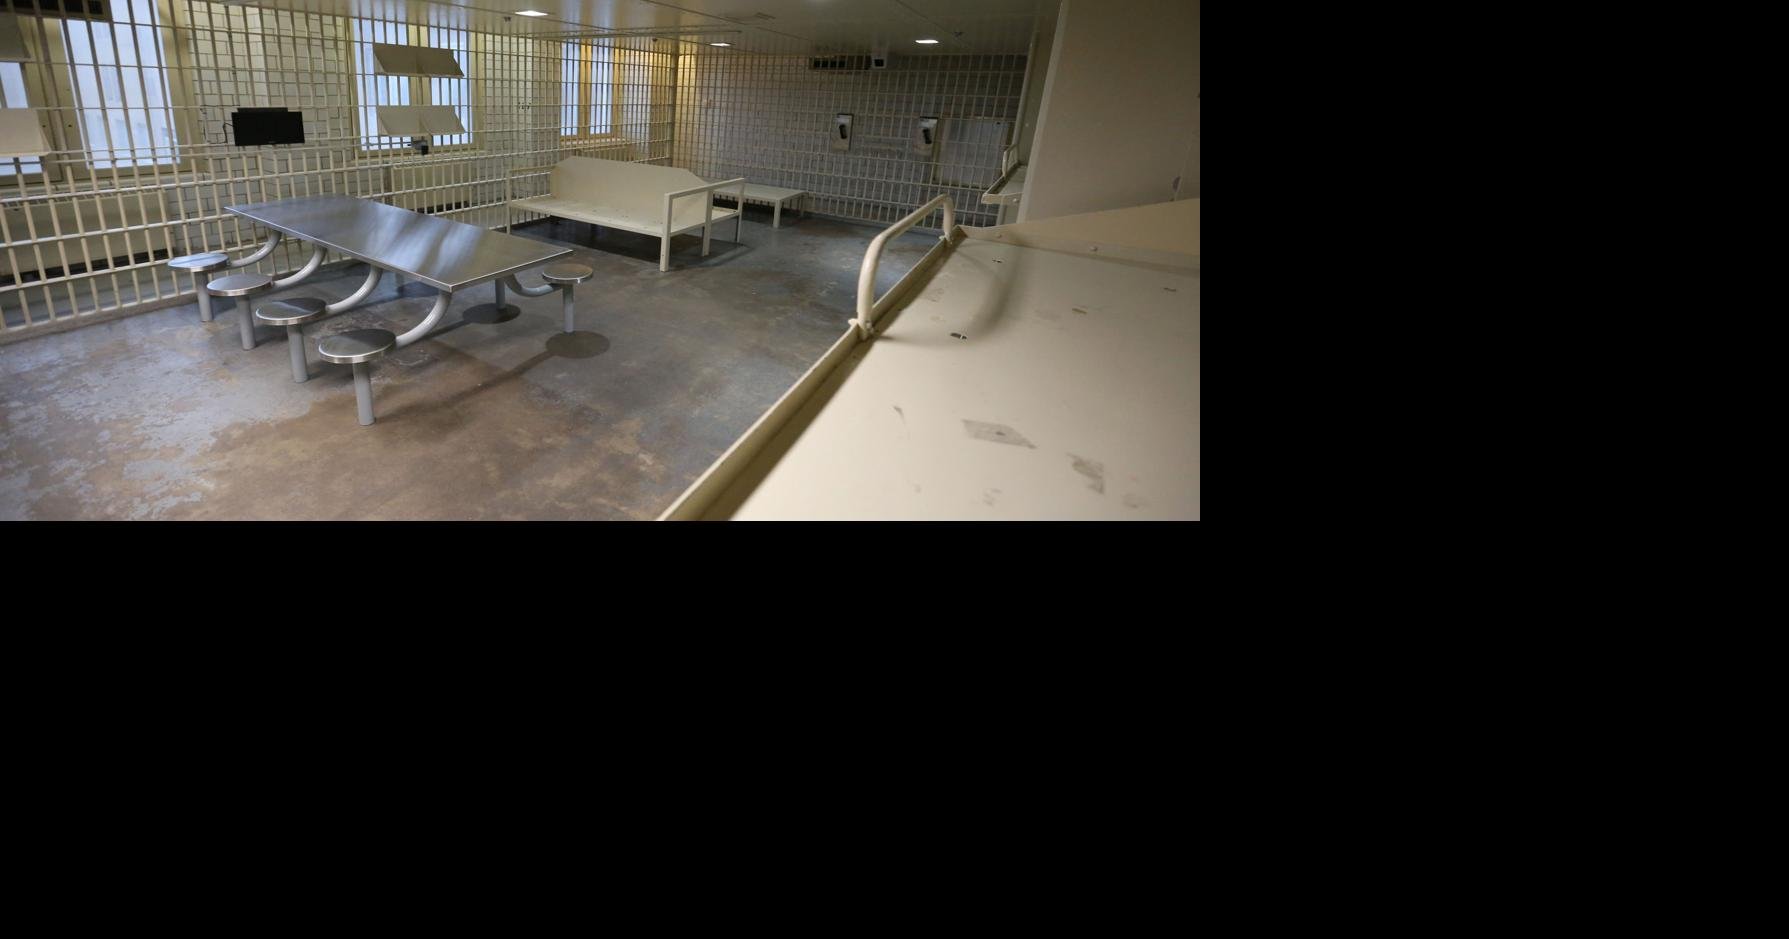 Dane County Jail renovation plan pushes video visitation Politics